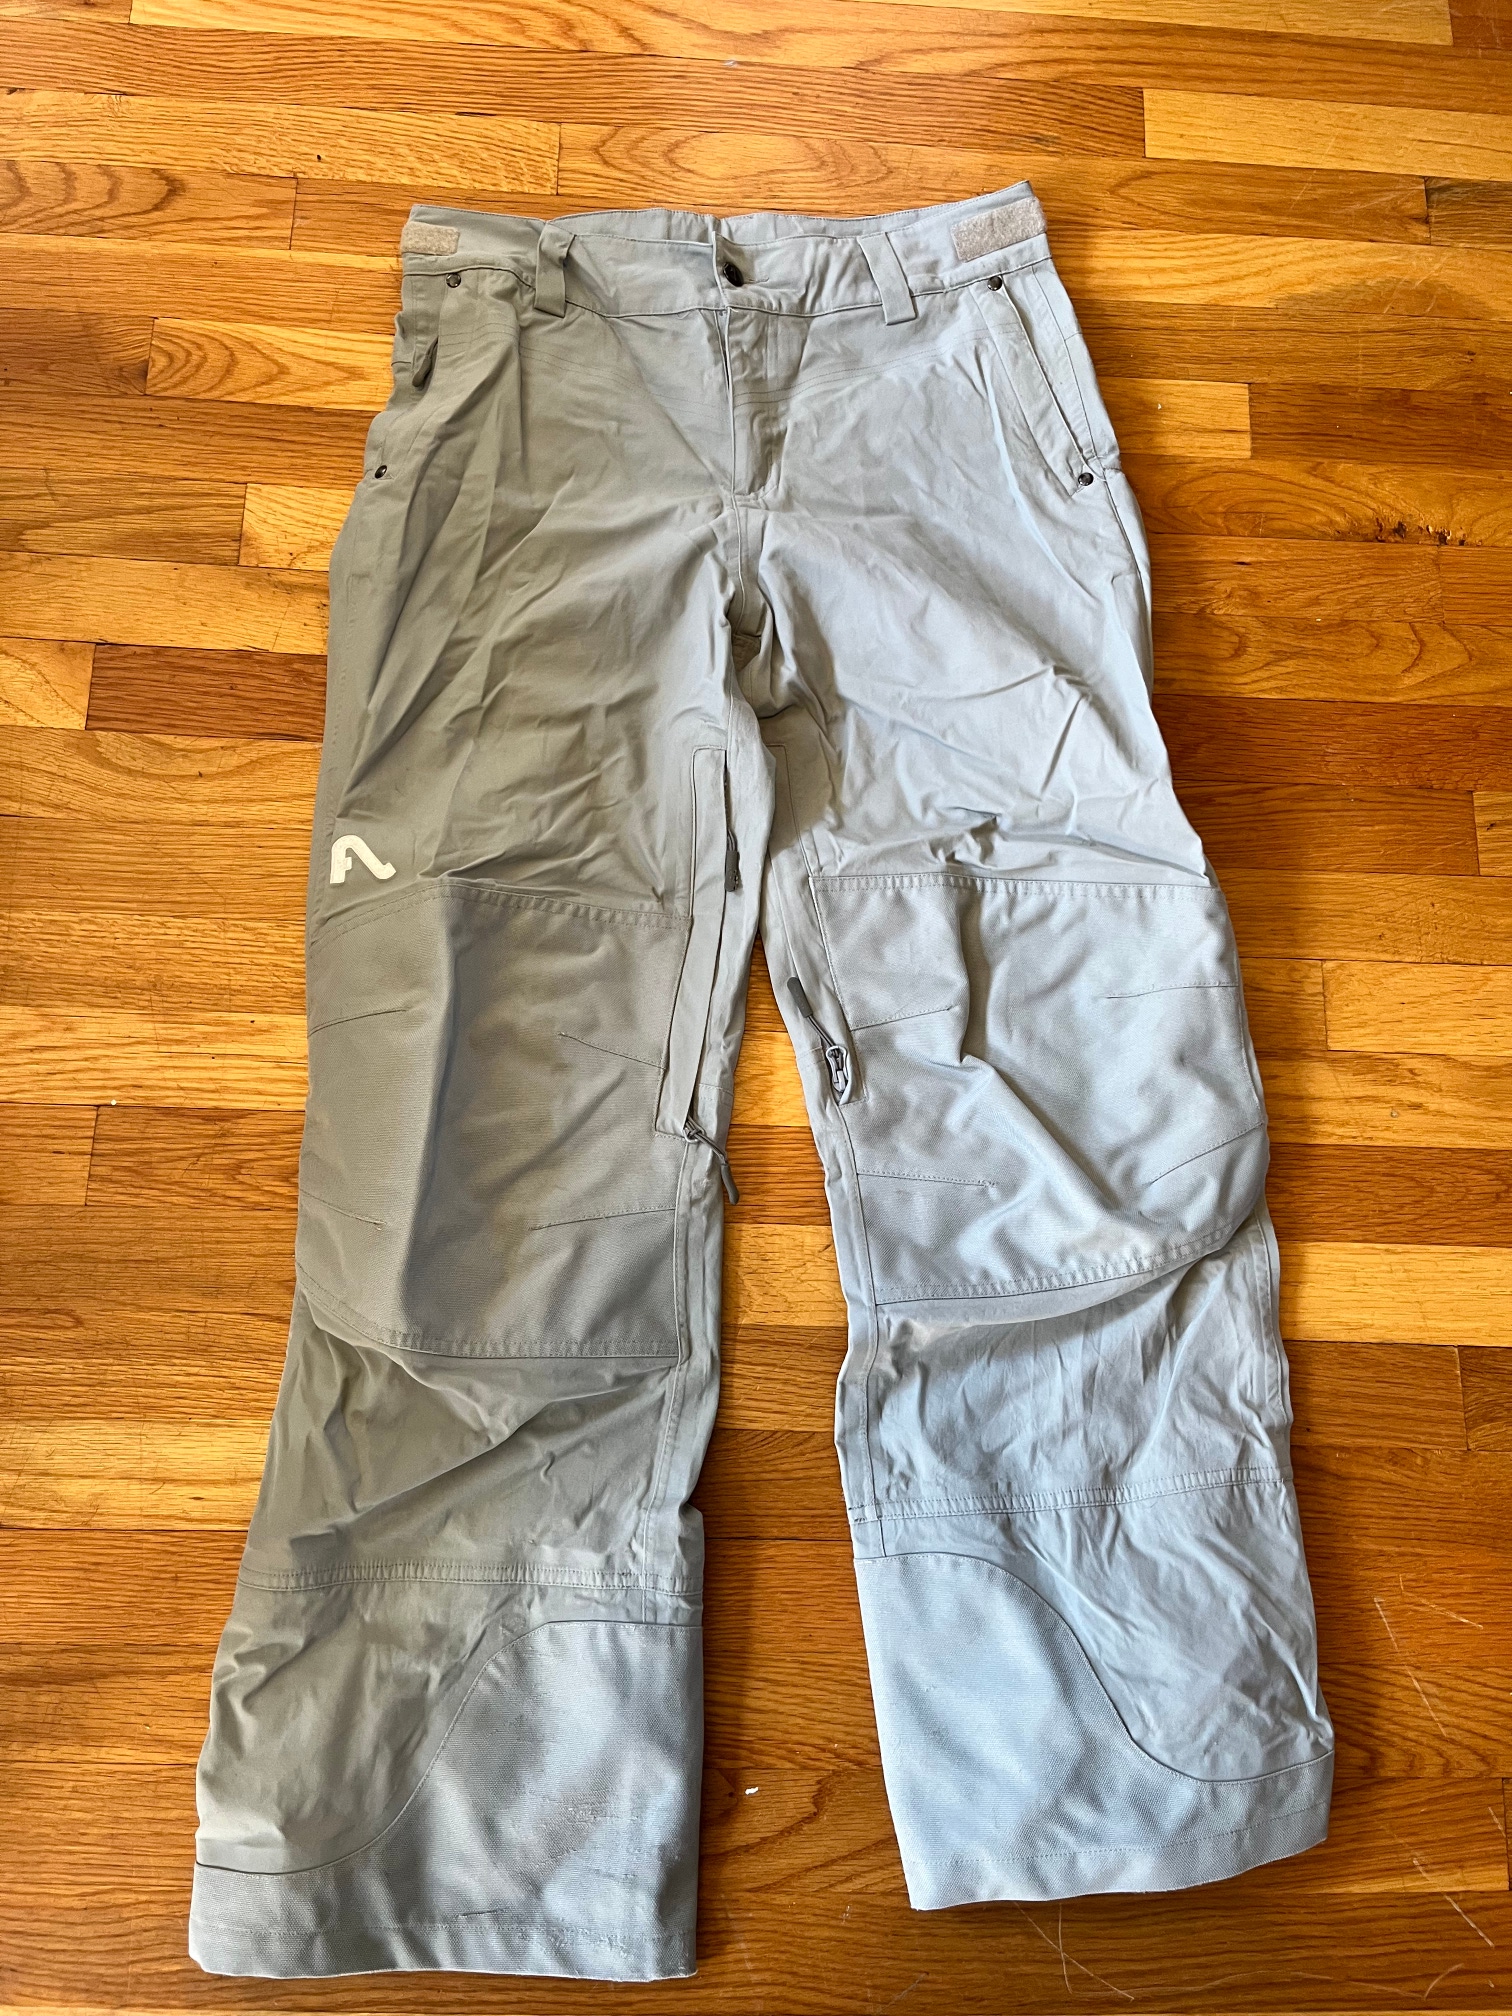 New ARCTIX PANTS SNOW BLK 3T YTH Winter Outerwear / Pants